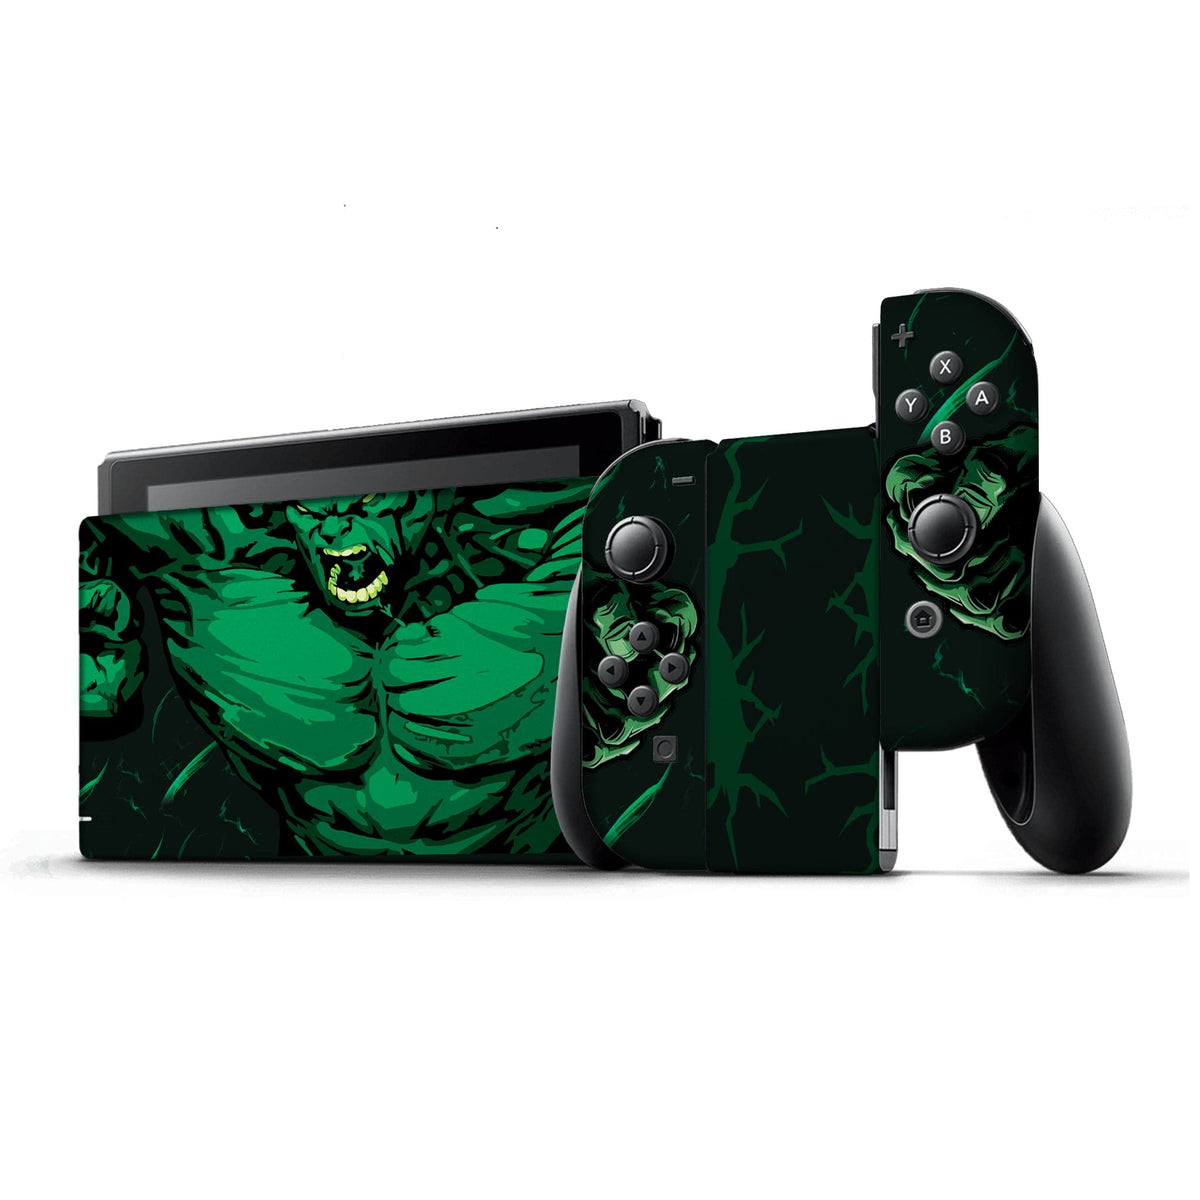 Comprar Hulk Vs. - Microsoft Store pt-BR